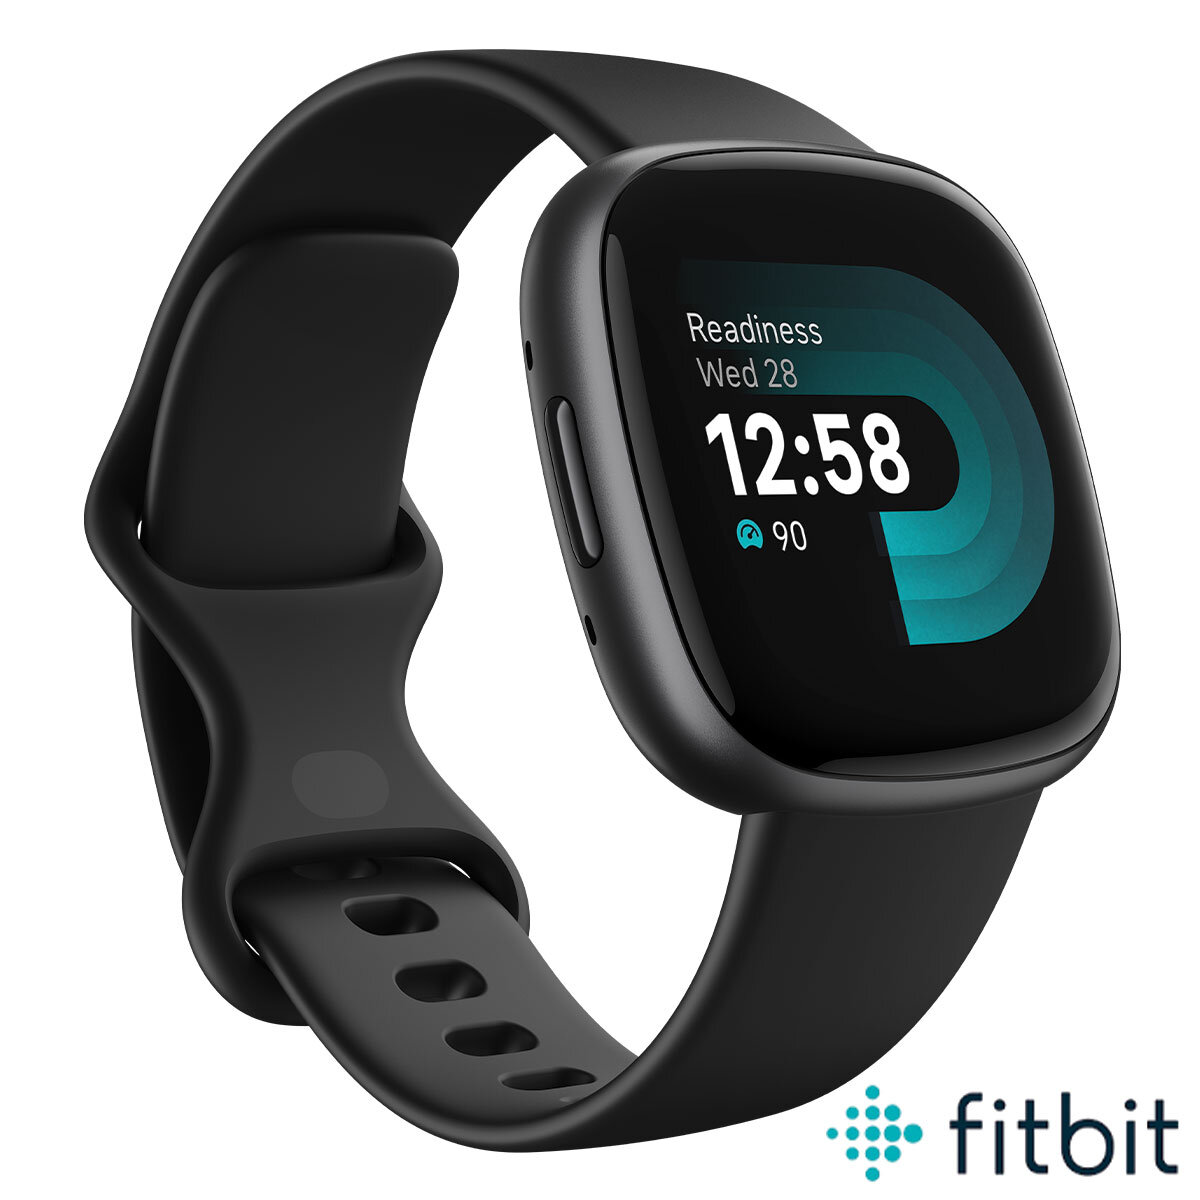 Buy FitBit Versa 4 Smart Watch in Black/Graphite at Costco.co.uk